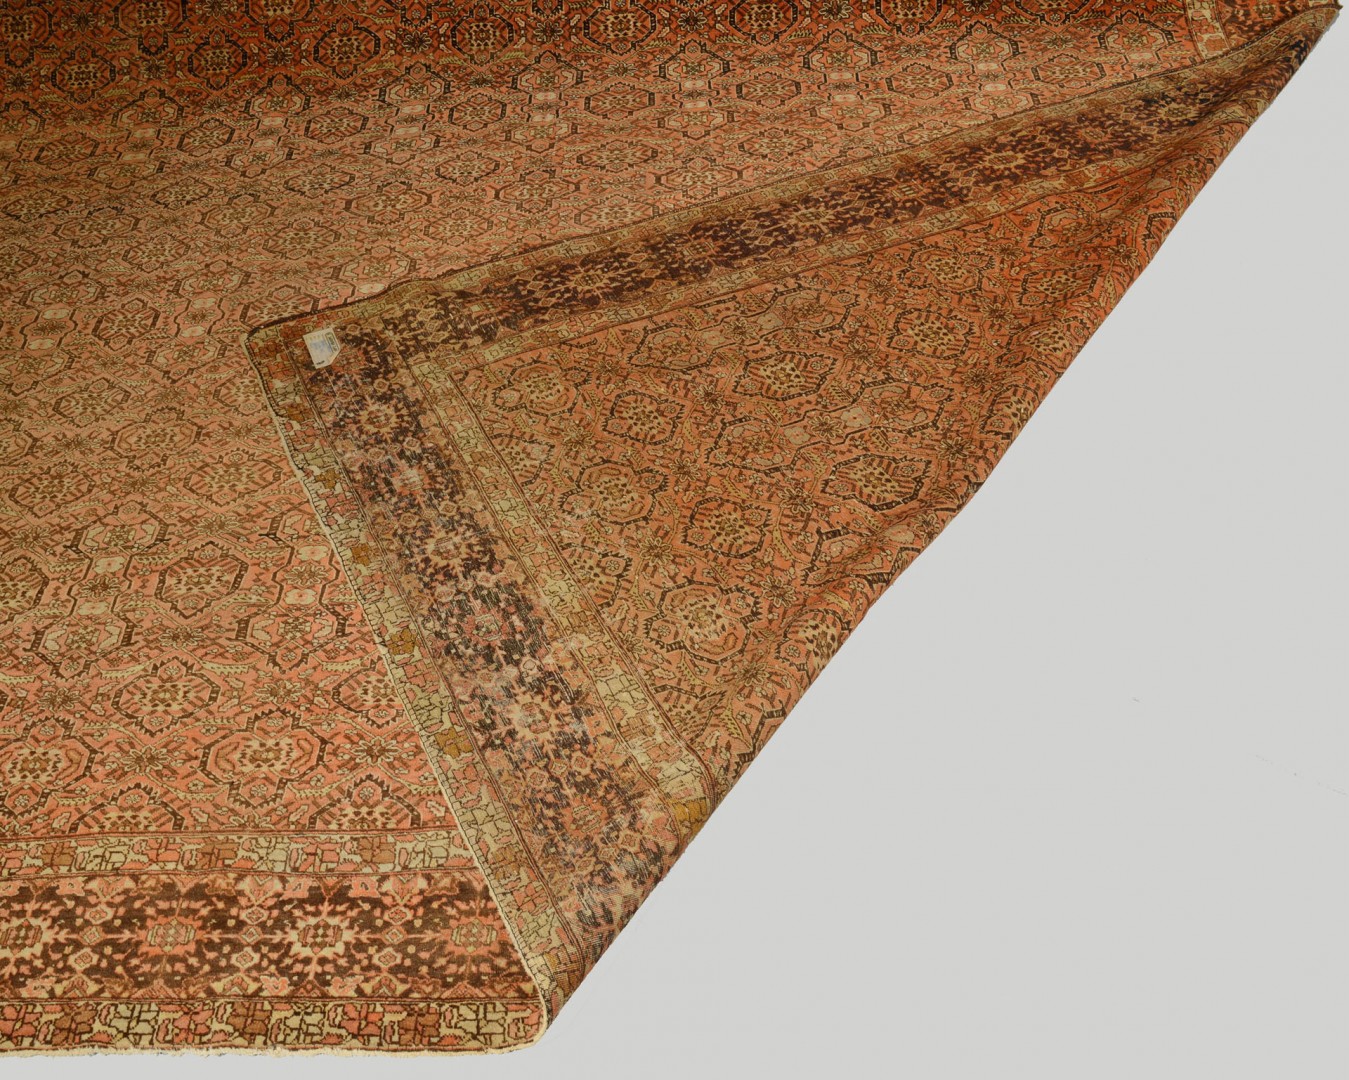 Lot 567: Large 12.5' x 18.4' Antique Persian Tabriz